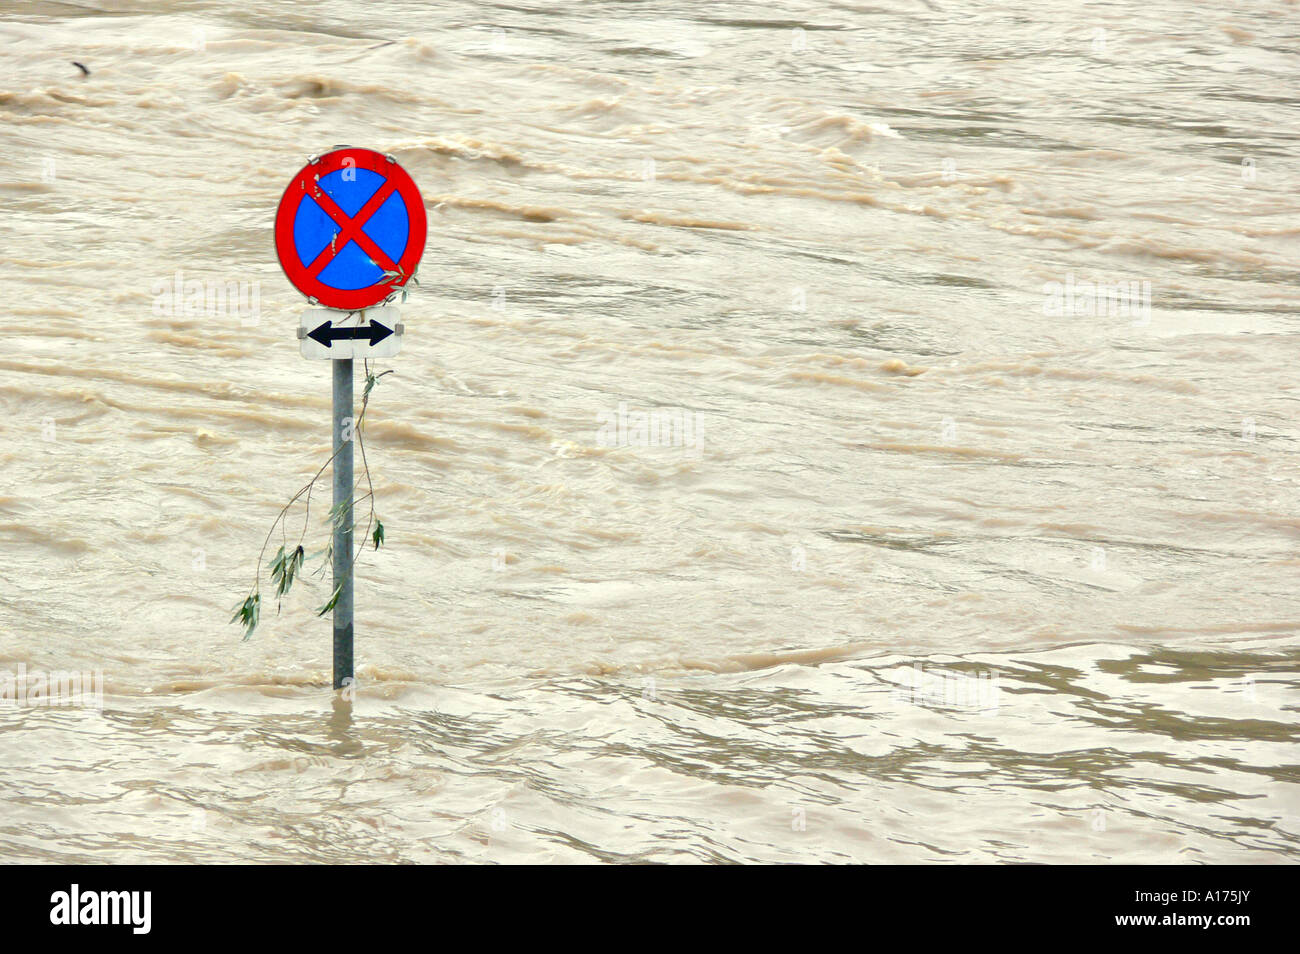 Austria, Steyr, Flood Stock Photo